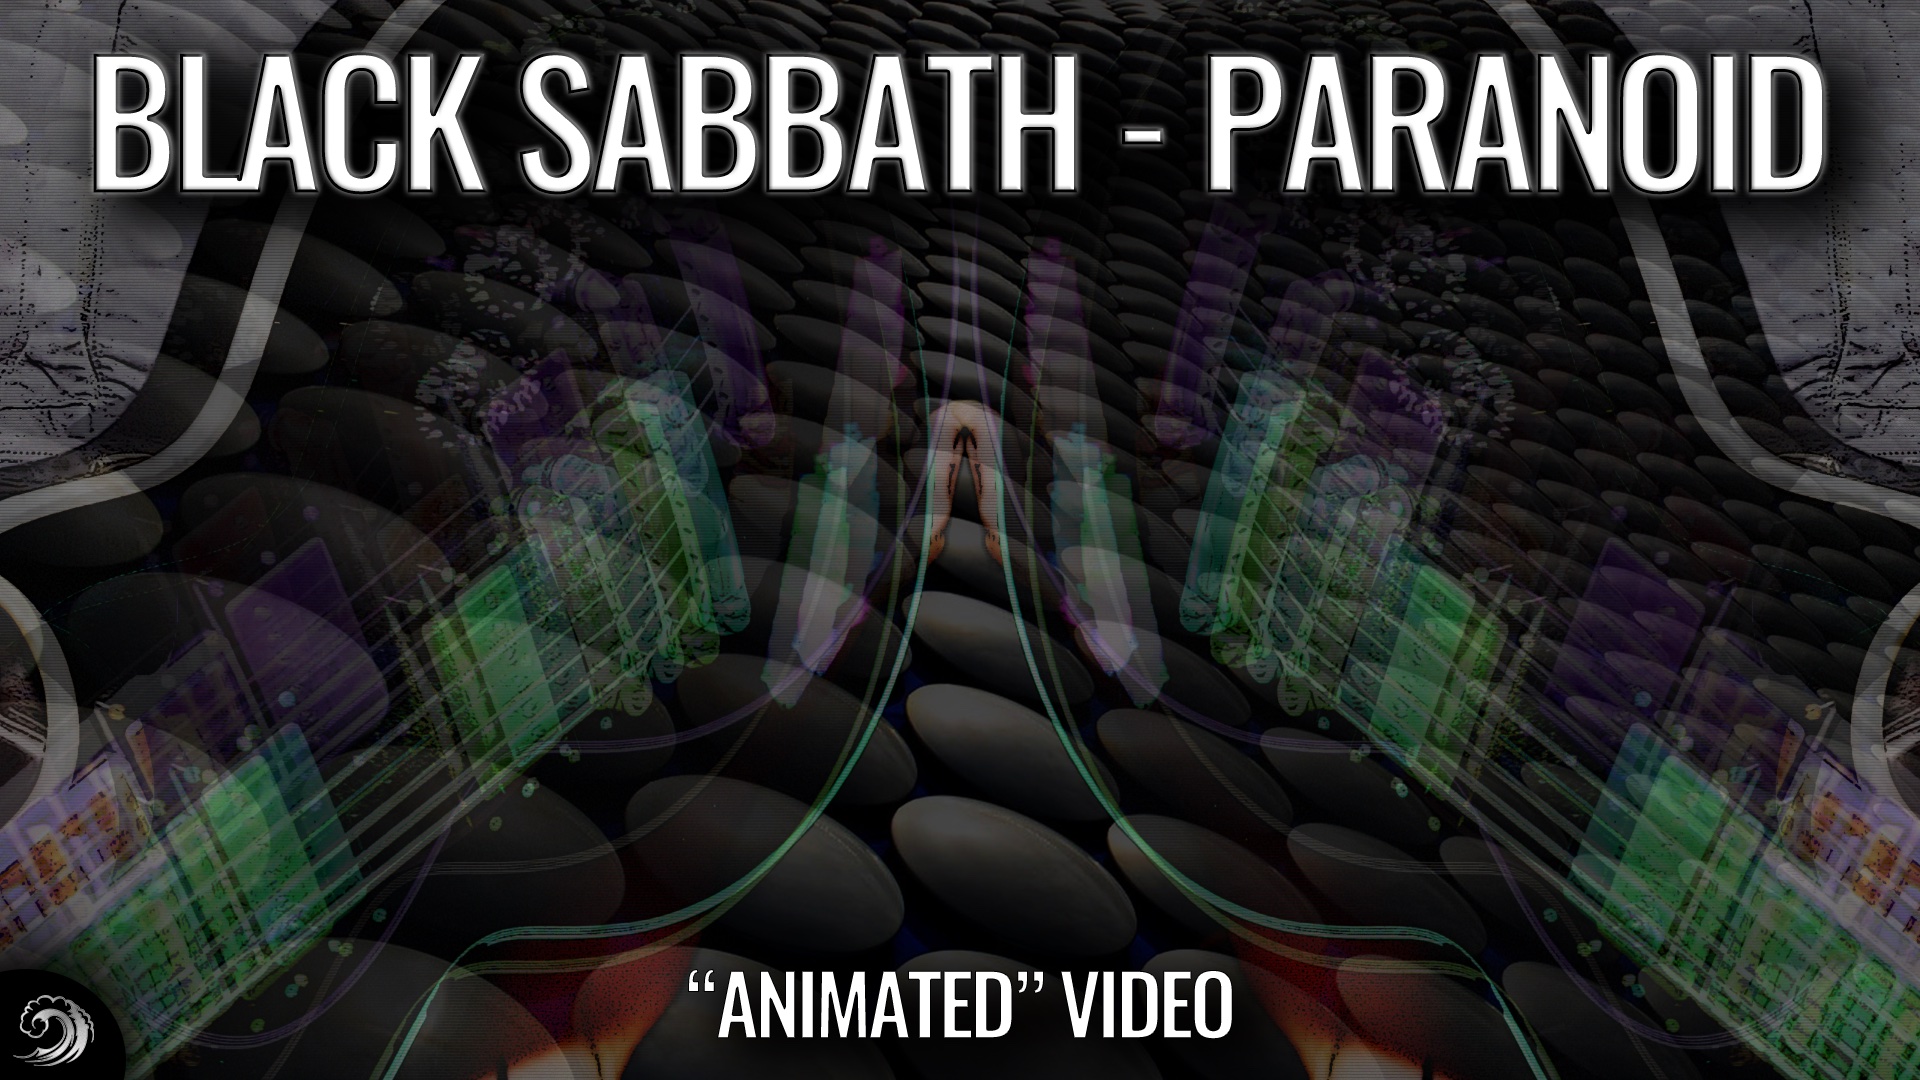 Black Sabbath Paranoid animated video